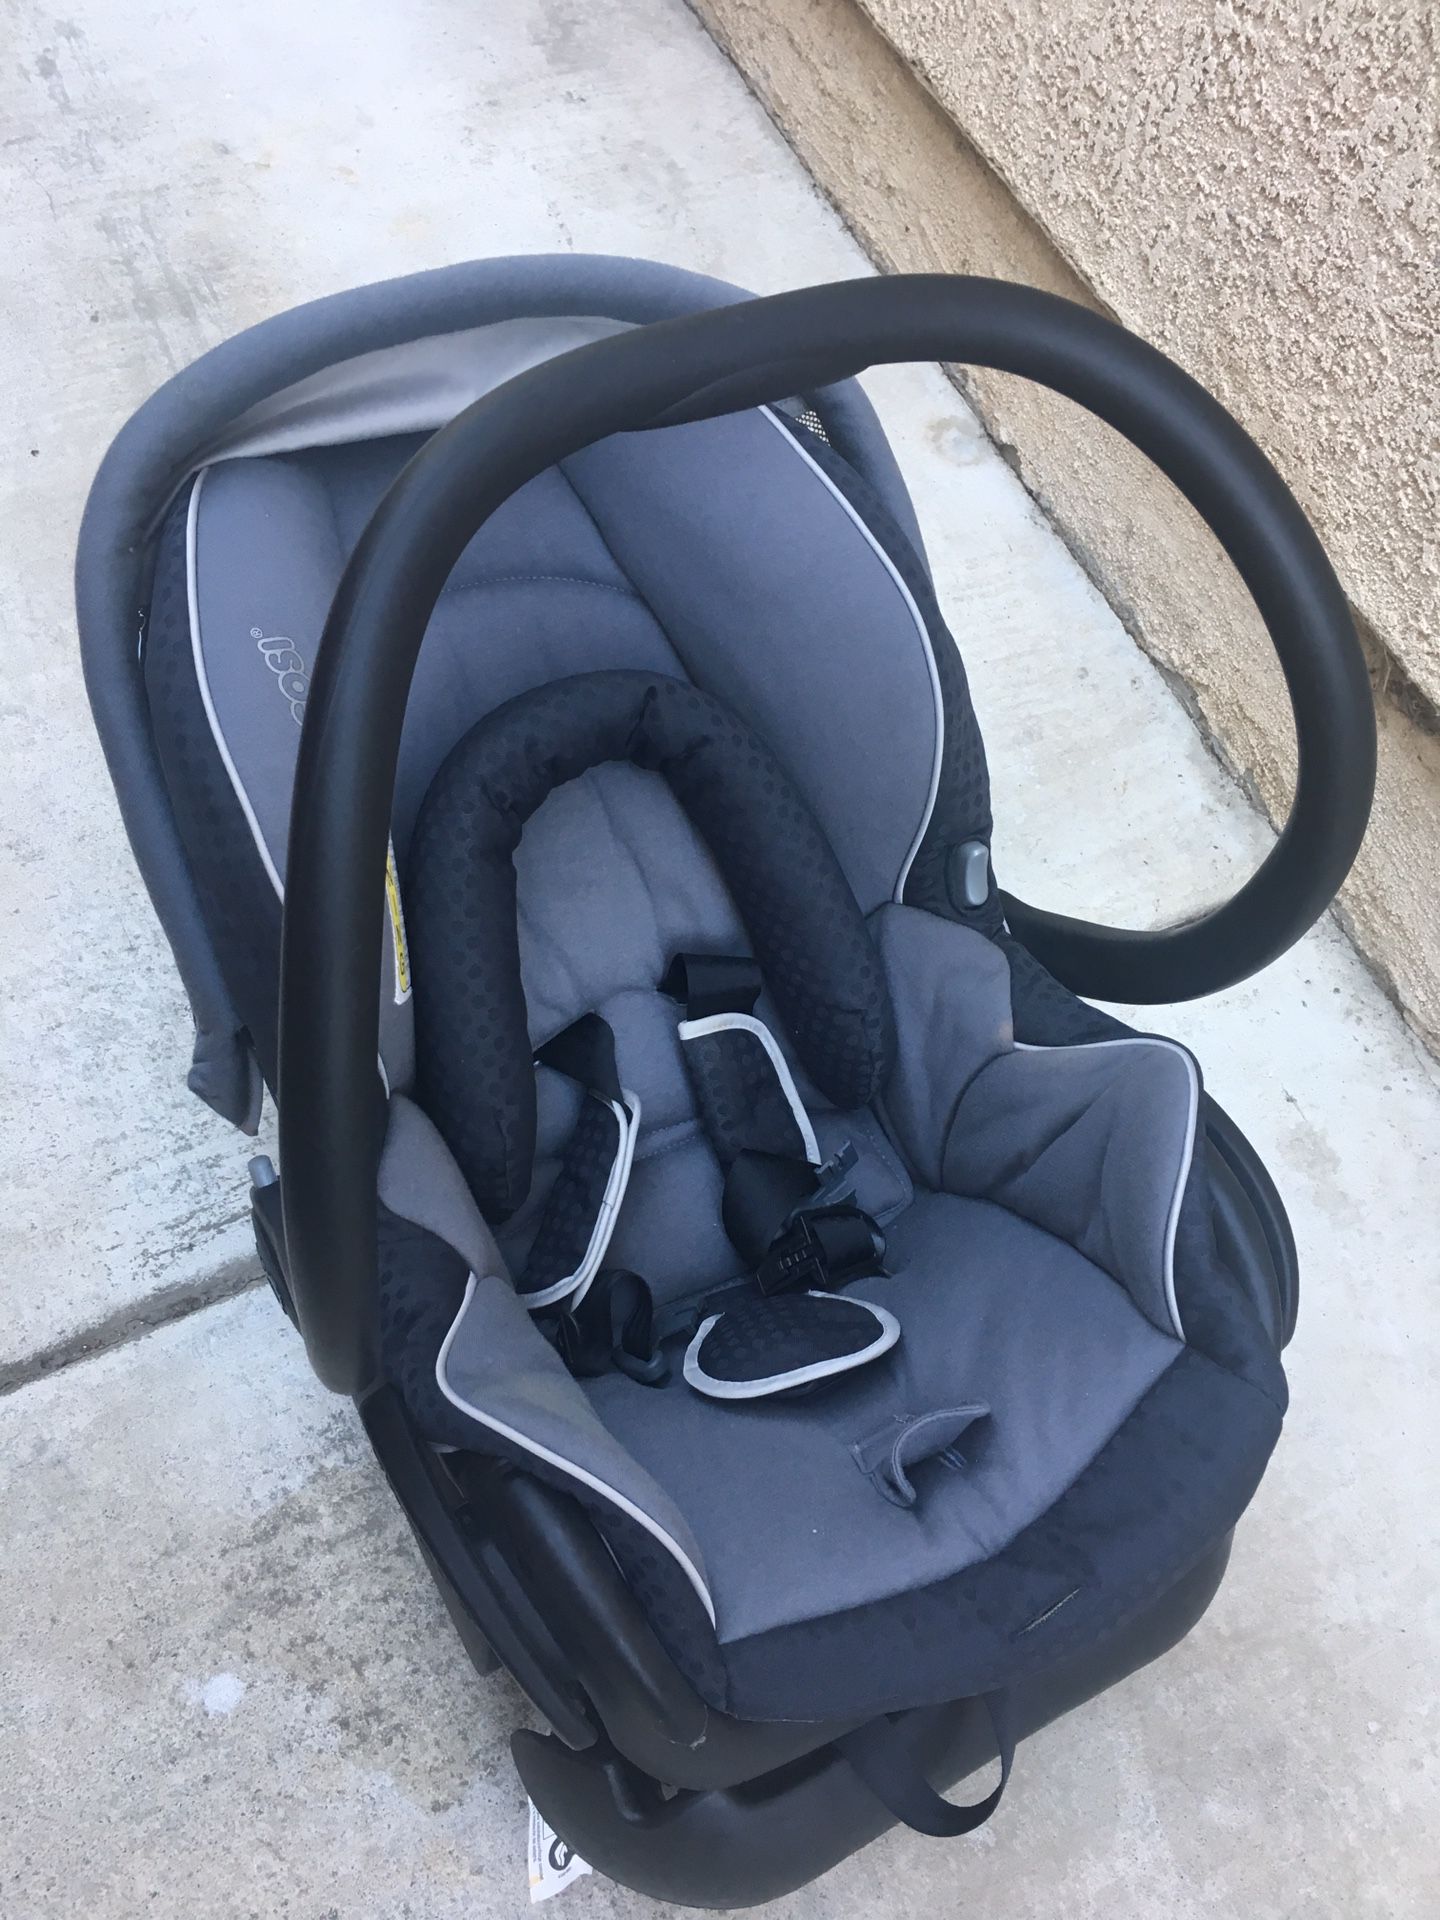 Used Maxi-Cosi 30 Infant Car Seat With Base, Grey Black, One Size